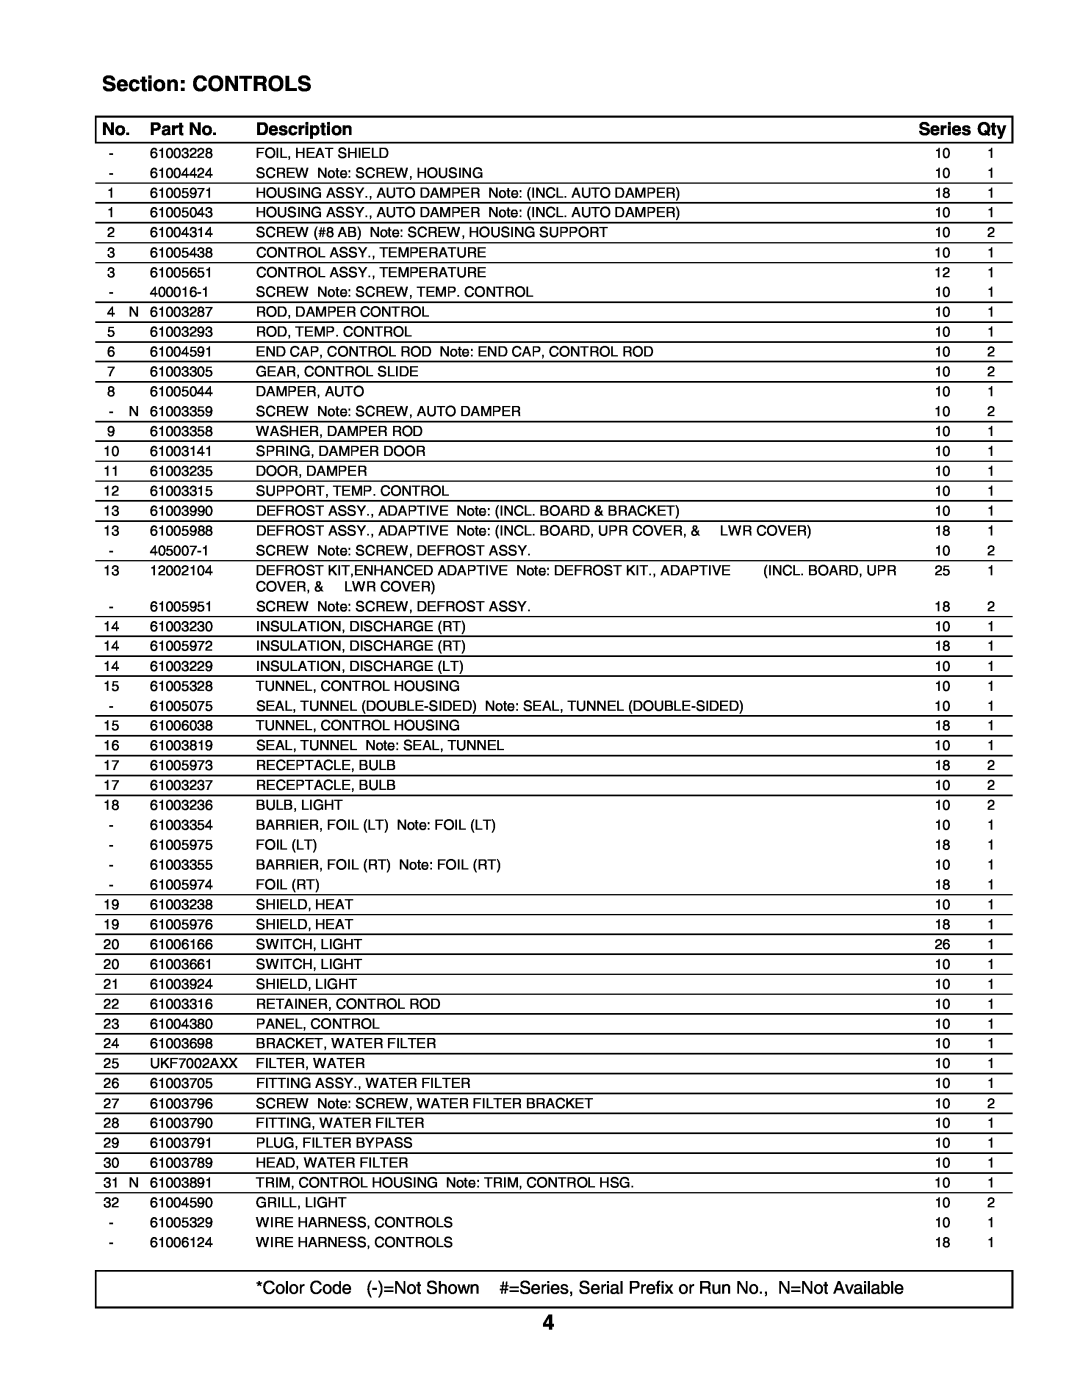 Maytag MSD2756GEW manual Section CONTROLS, Description, Series Qty 